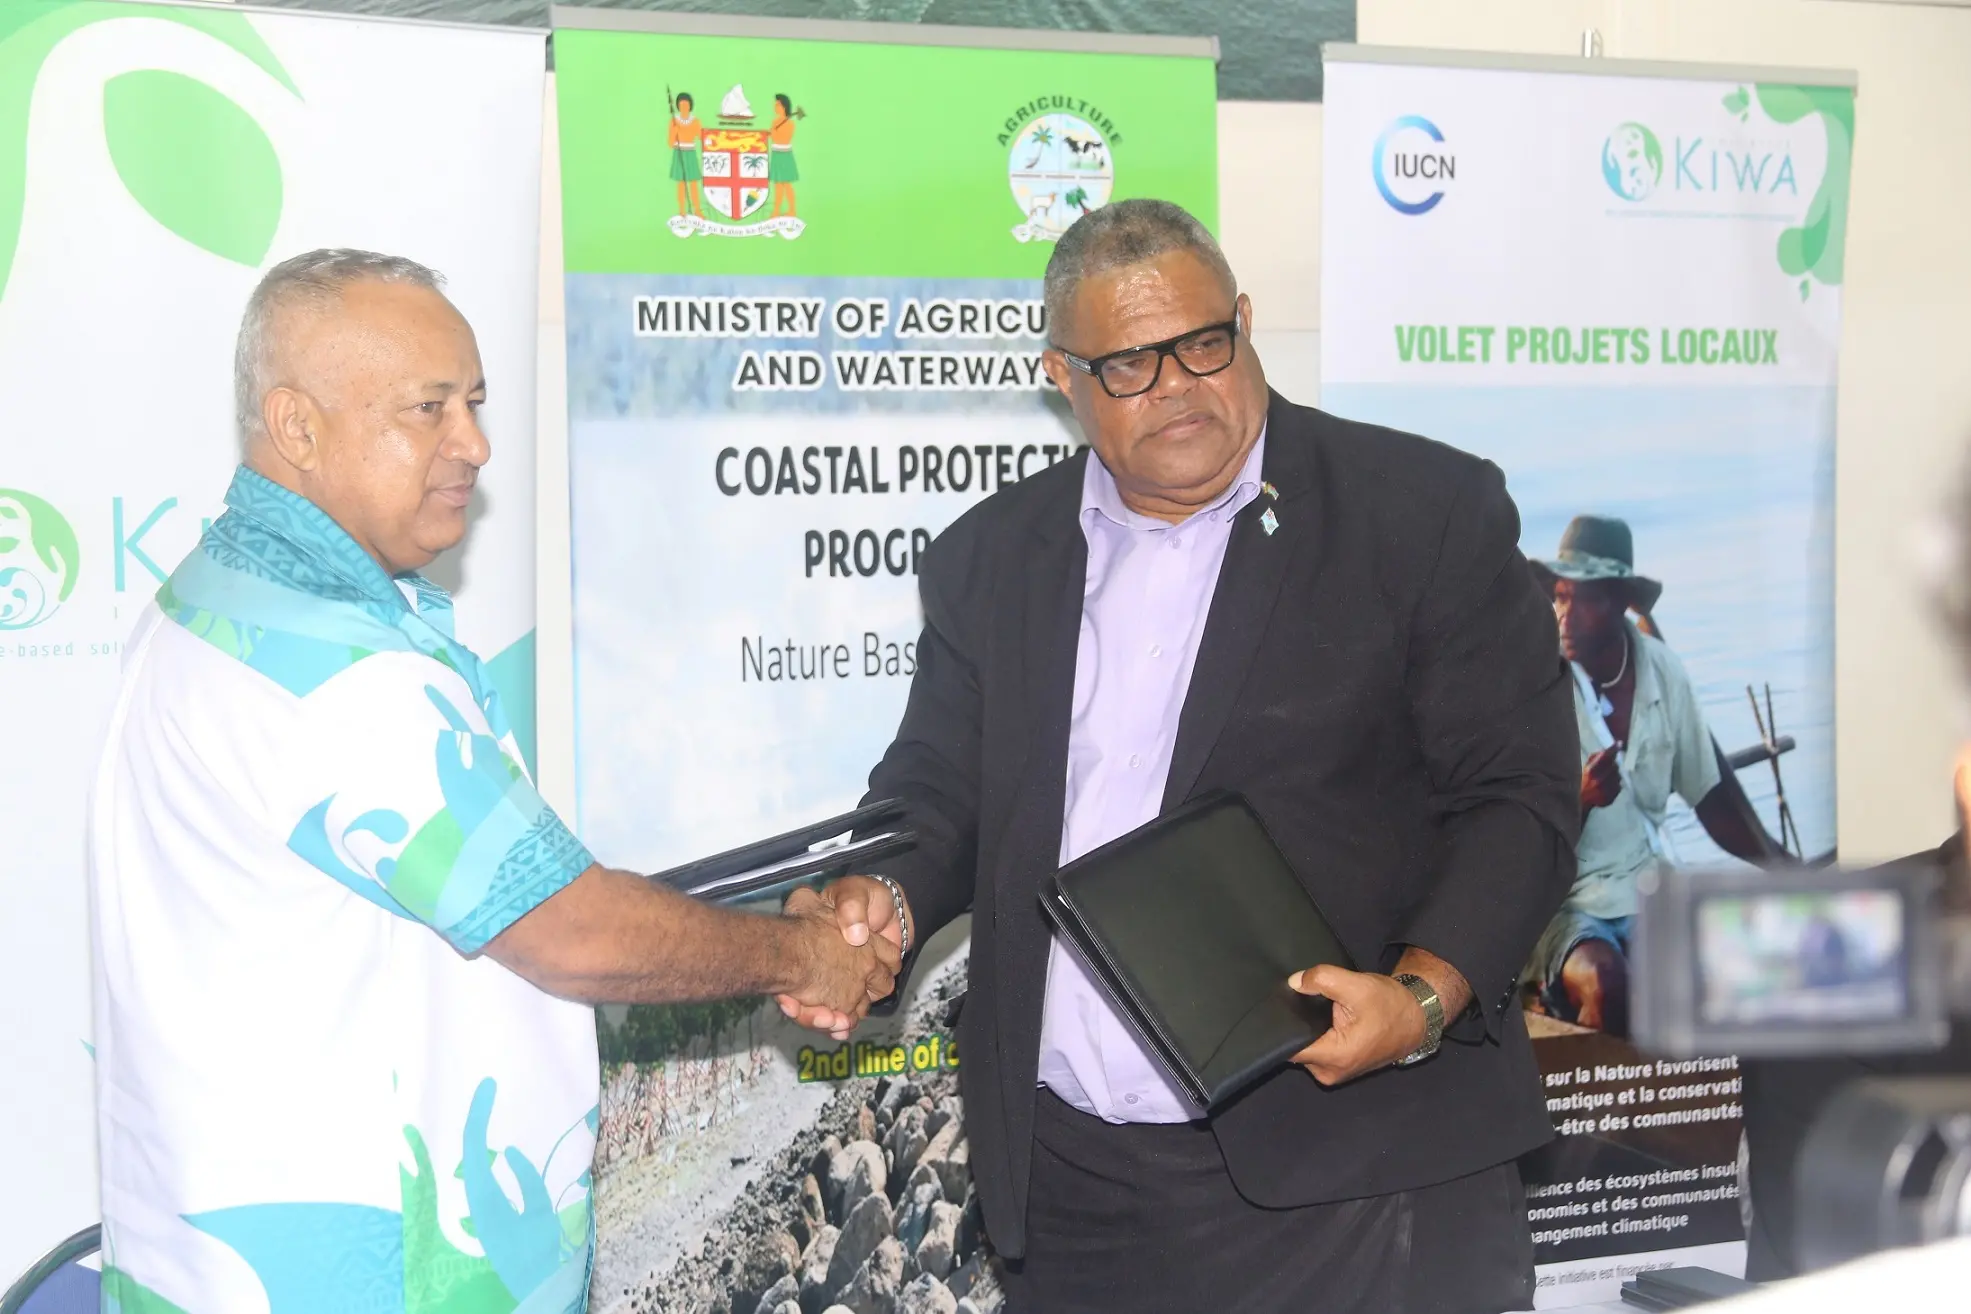 IUCN Regional Director Mason Smith and Fiji Minister of Agriculture and Waterways Hon. Vatimi Rayalu signs Kiwa Initiative agreement